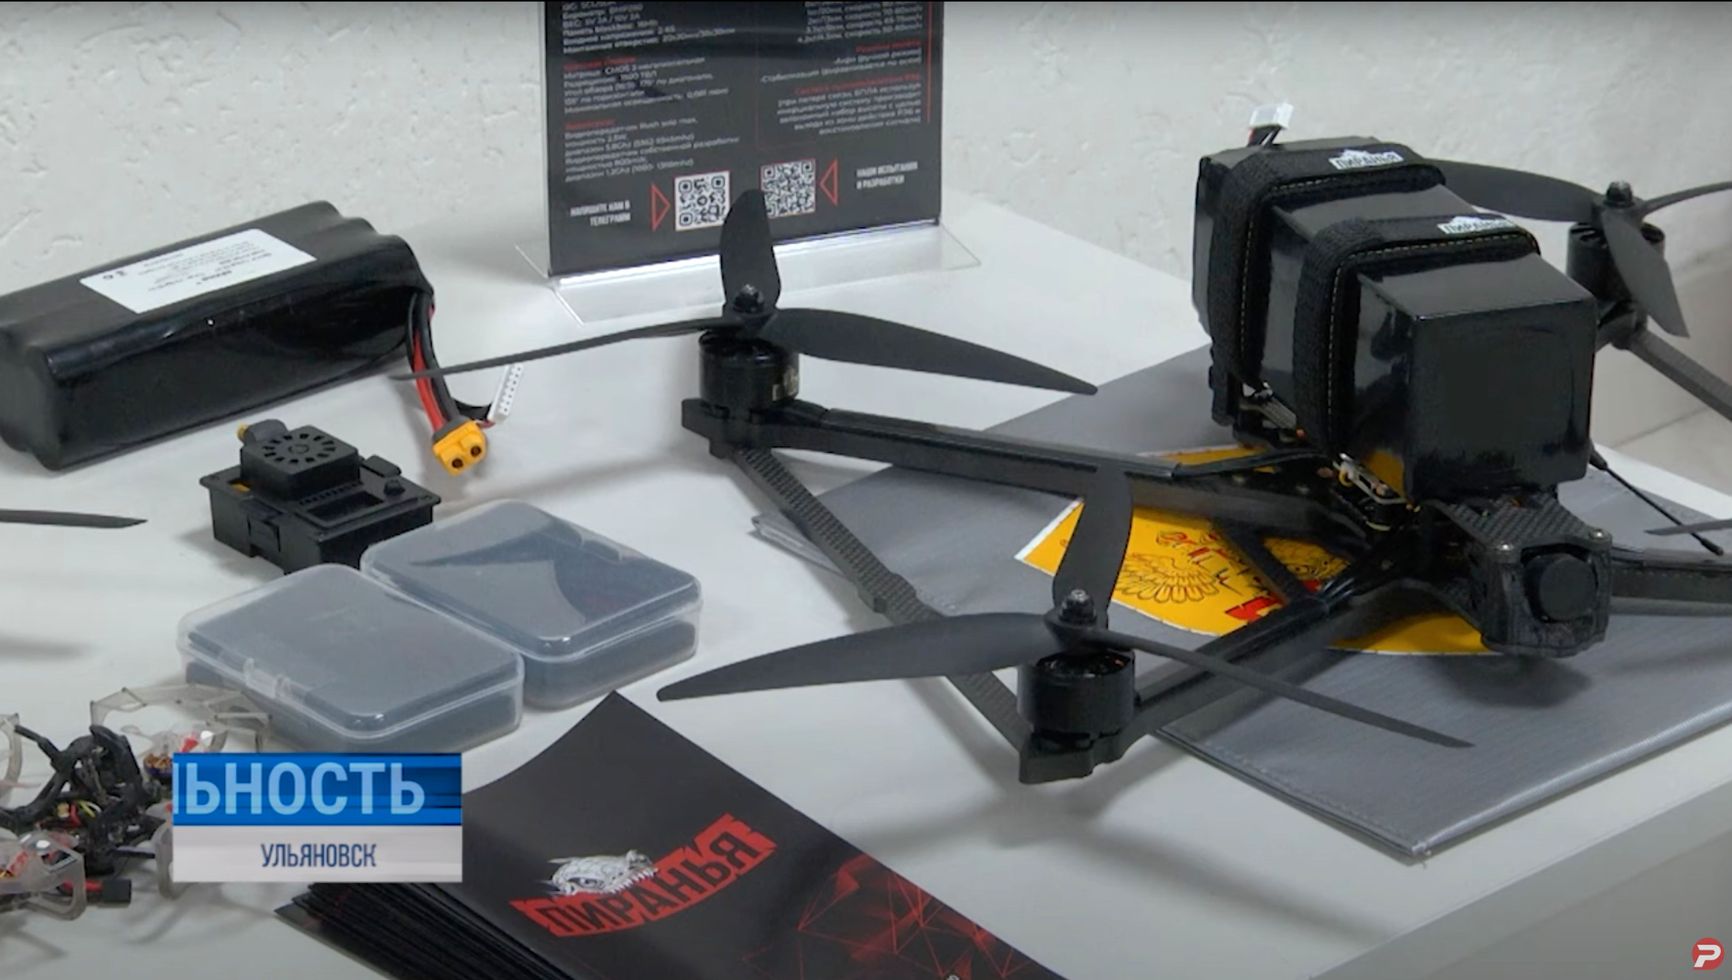 The Piranya drone